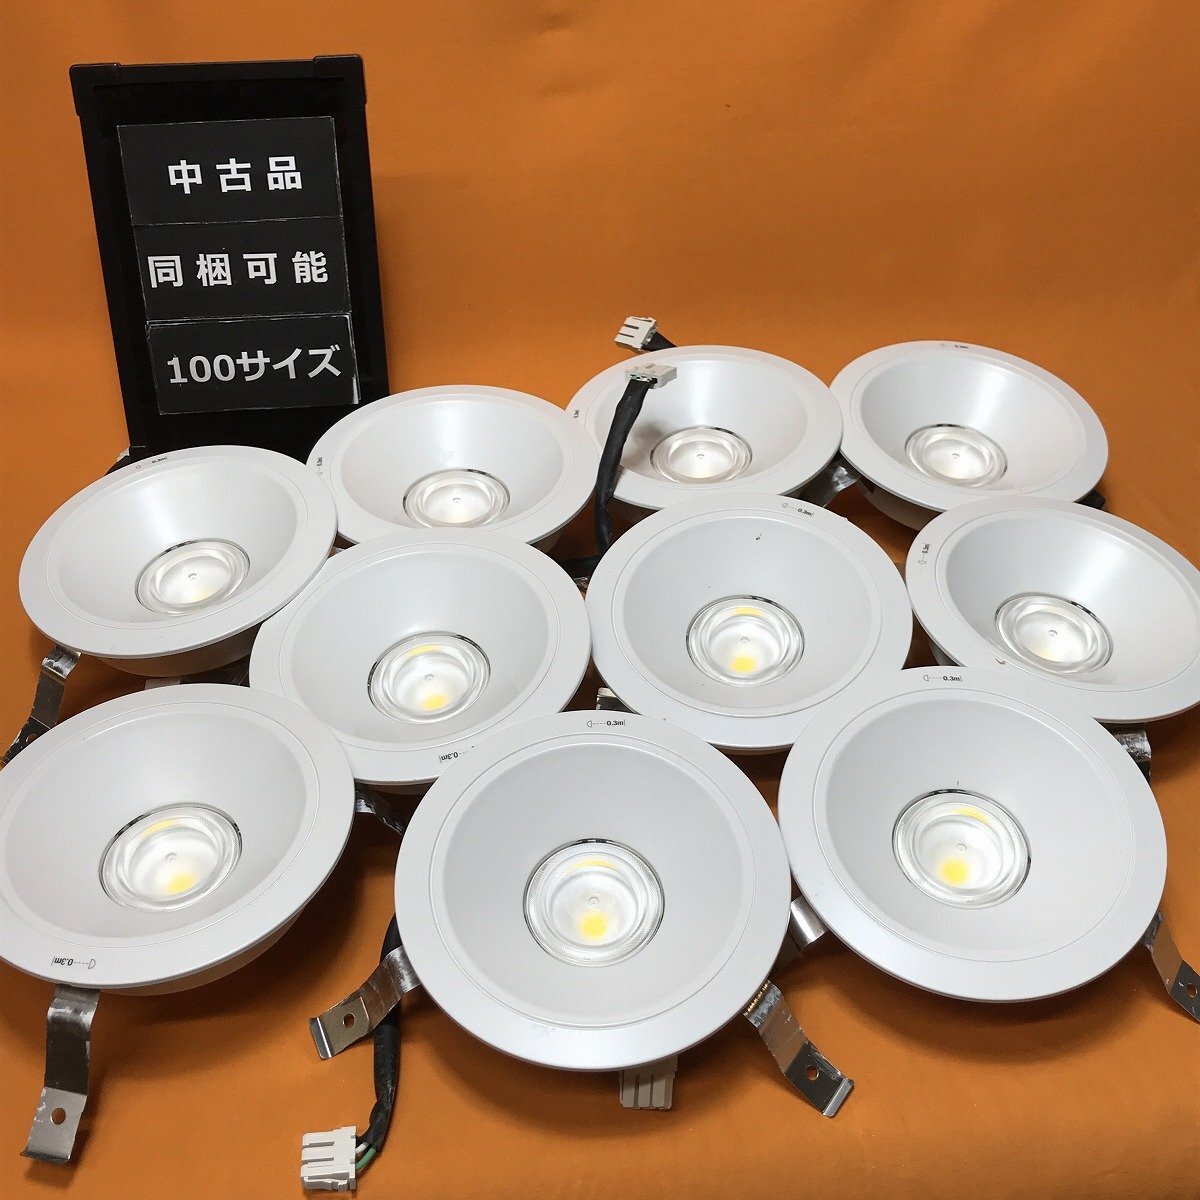 LED встраиваемый светильник (10 шт. комплект ) Panasonic NDN27605W φ150 днем белый цвет sa Tey go-